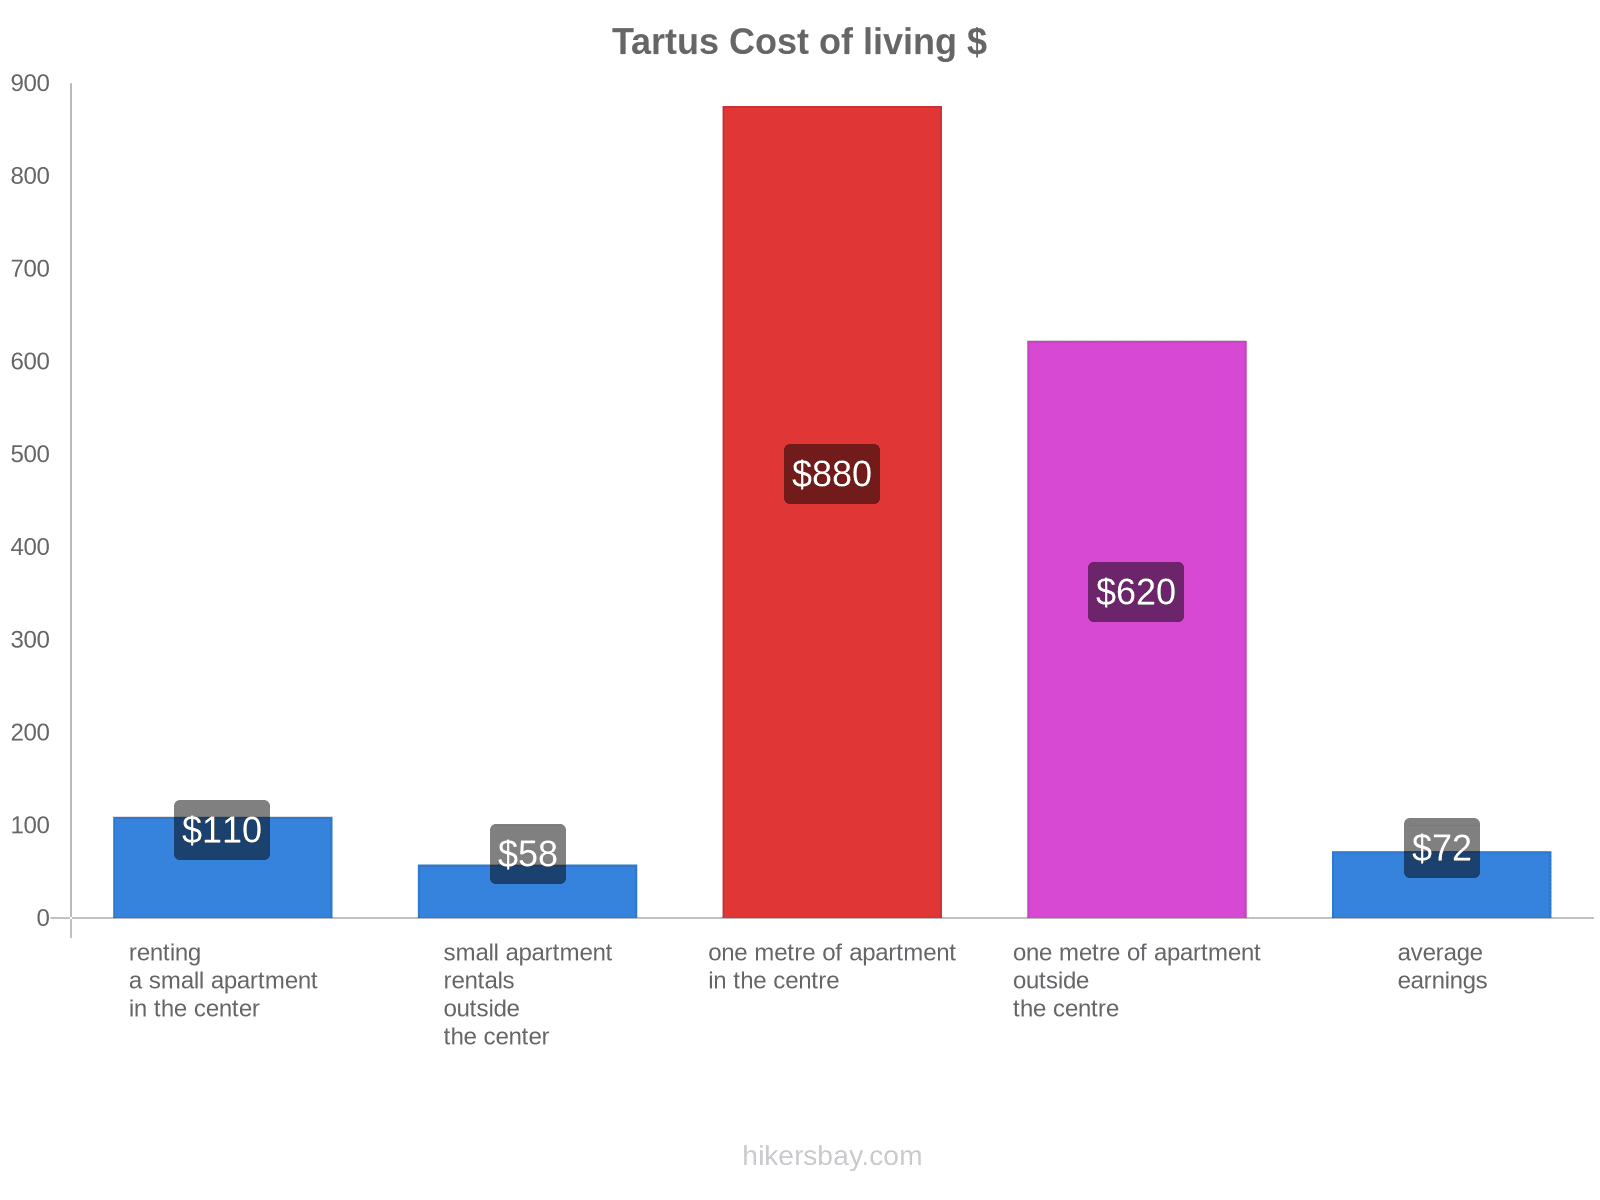 Tartus cost of living hikersbay.com